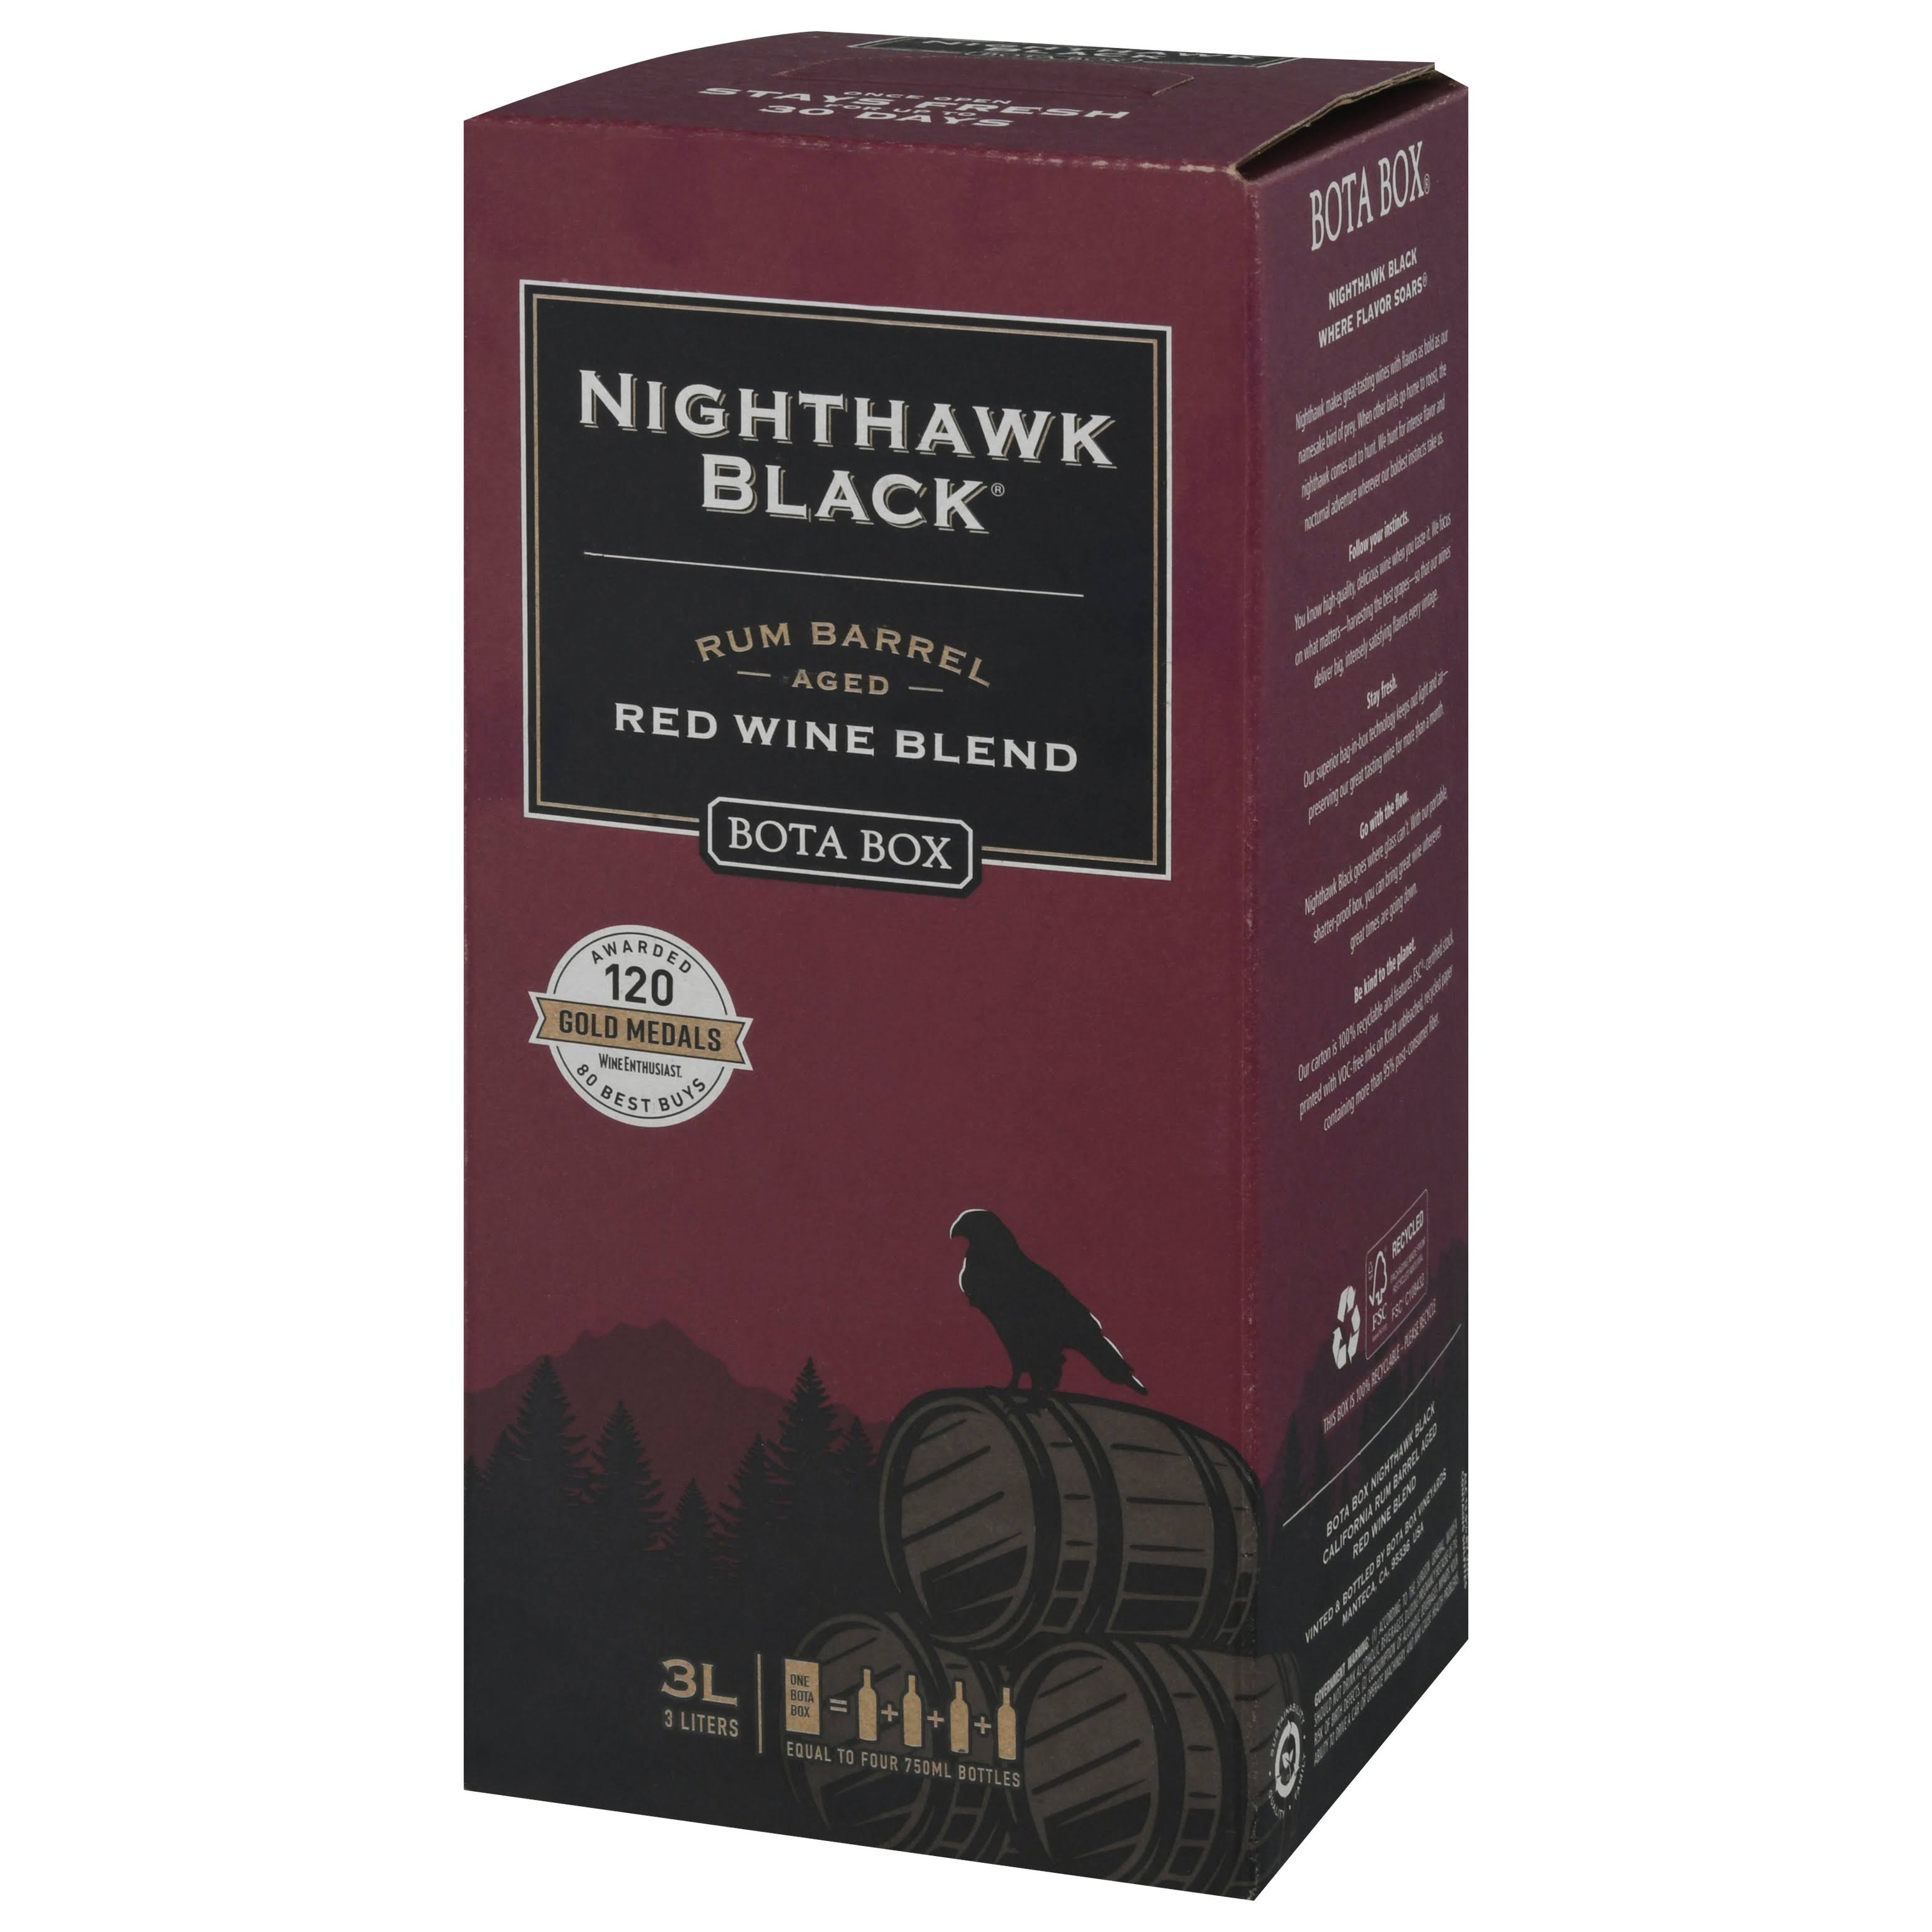 Bota Box Nighthawk Black Red Wine Blend Rum Barrel Aged 3L